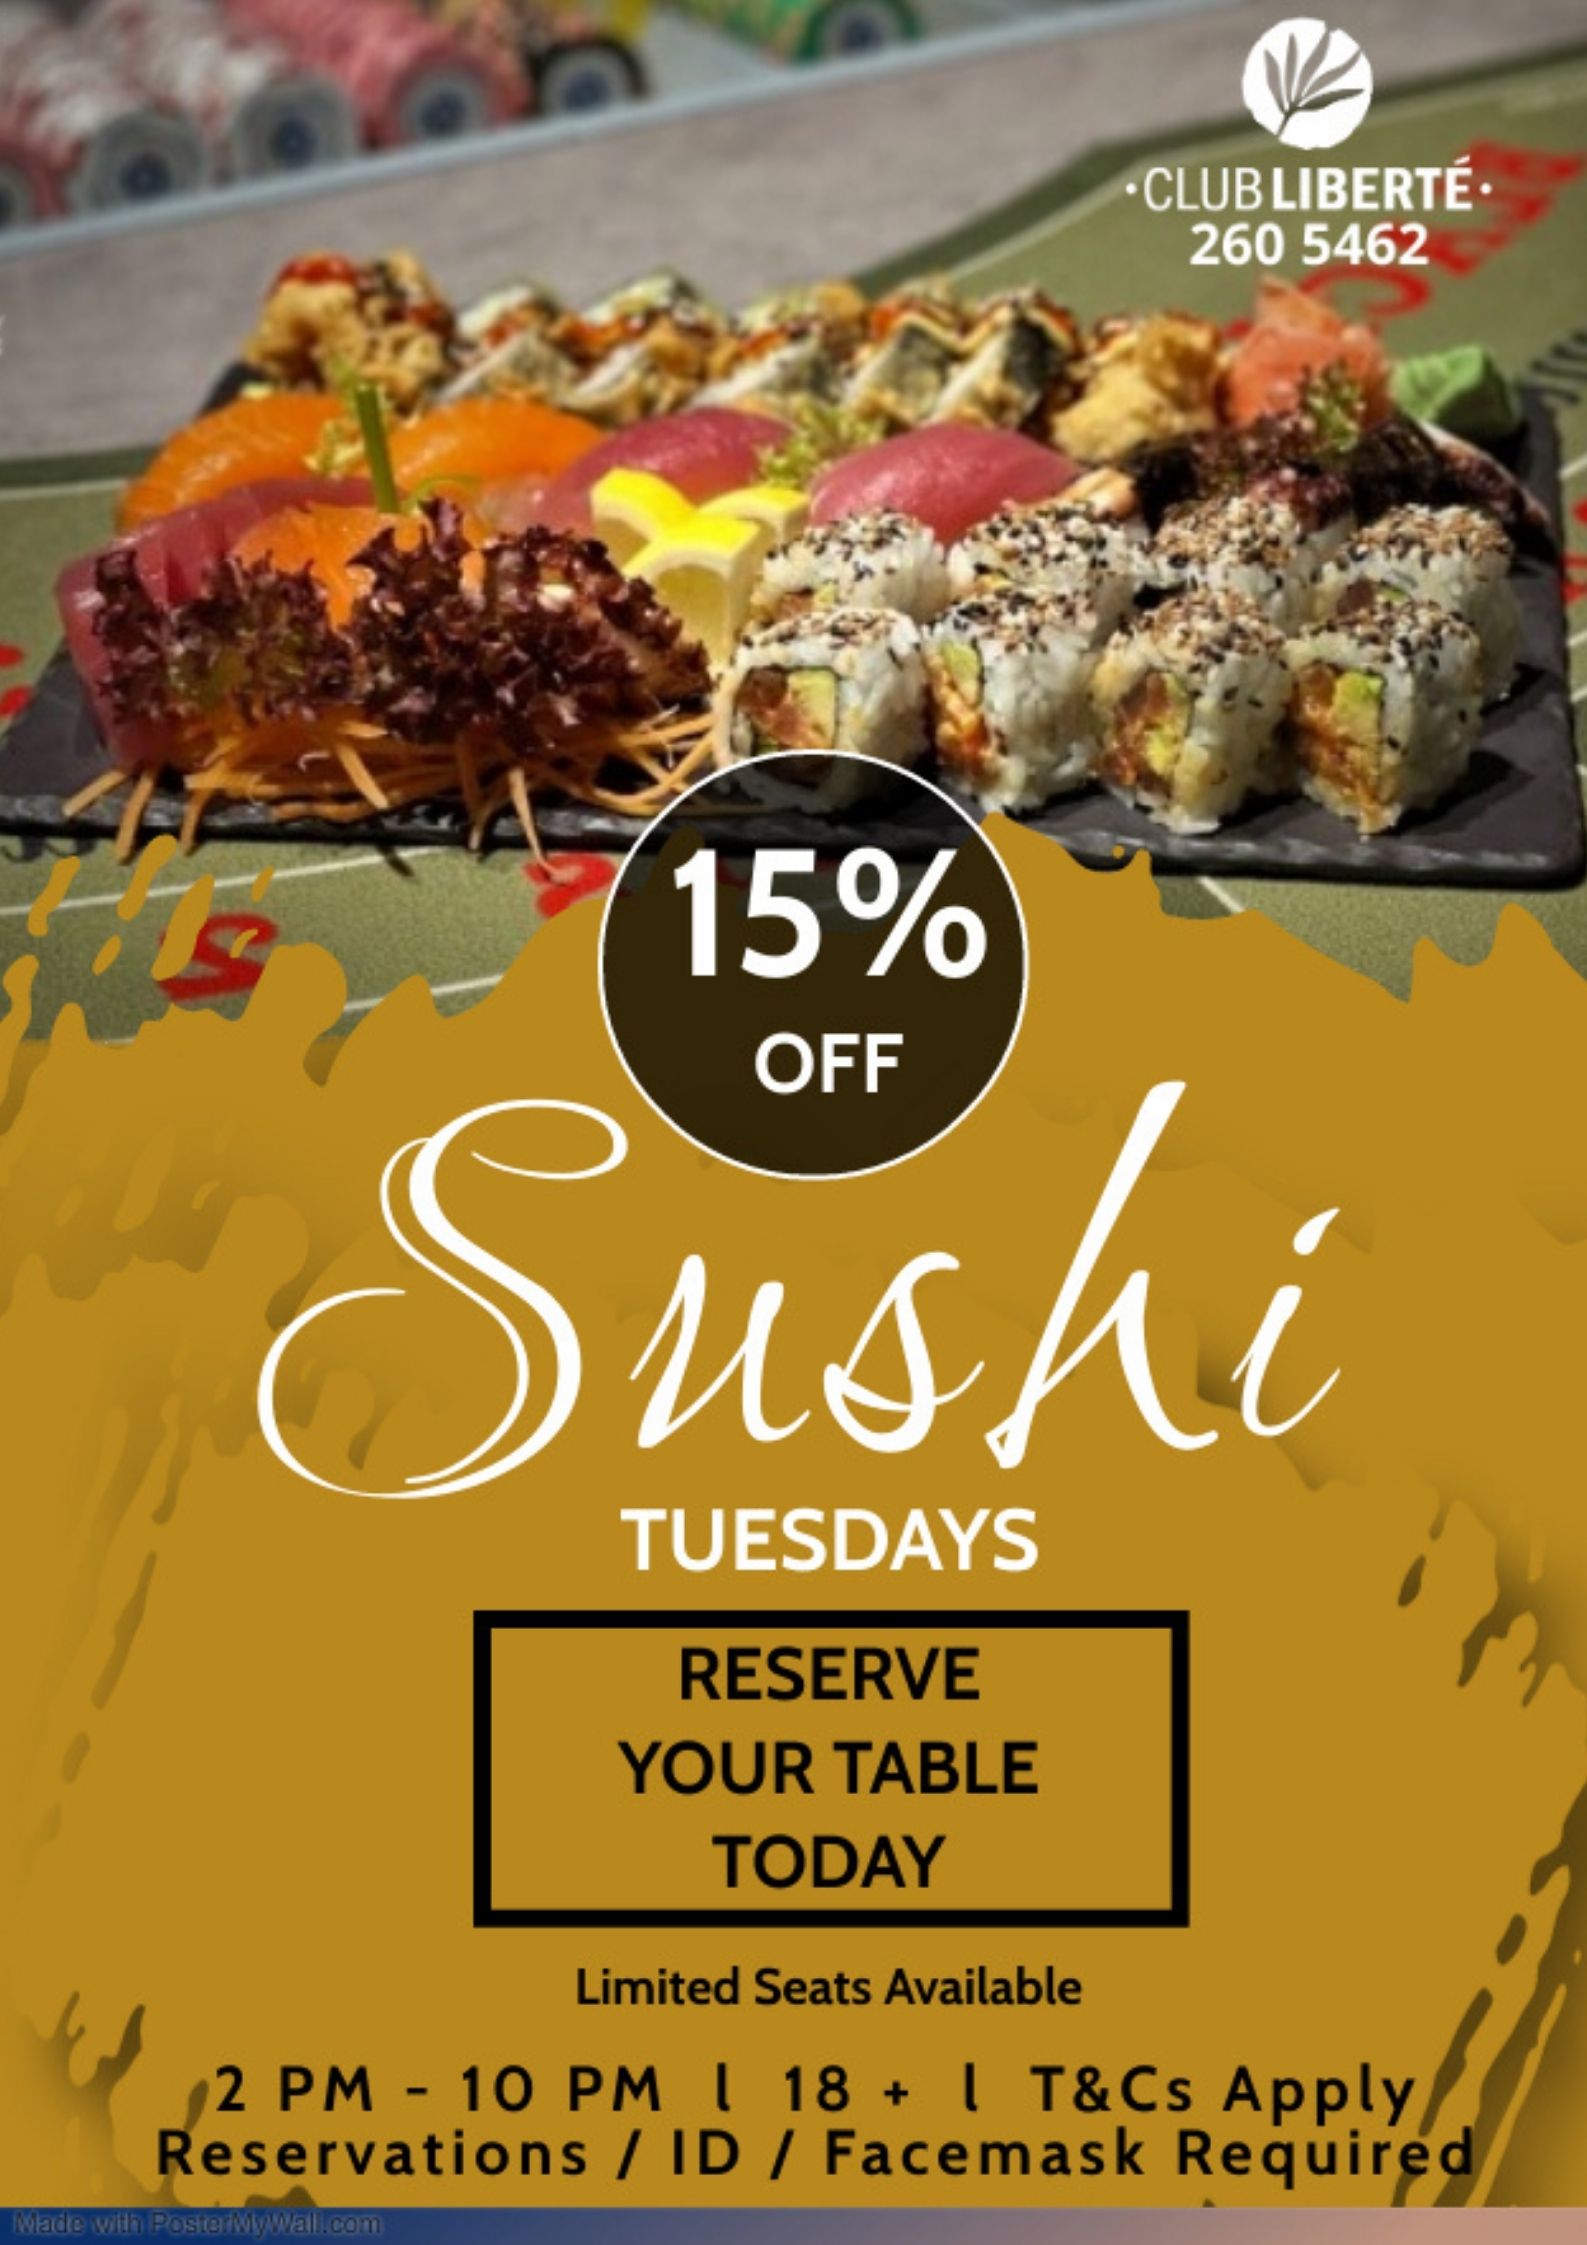 Sushi Tuesdays at Club Liberte – best Sushi in Seychelles